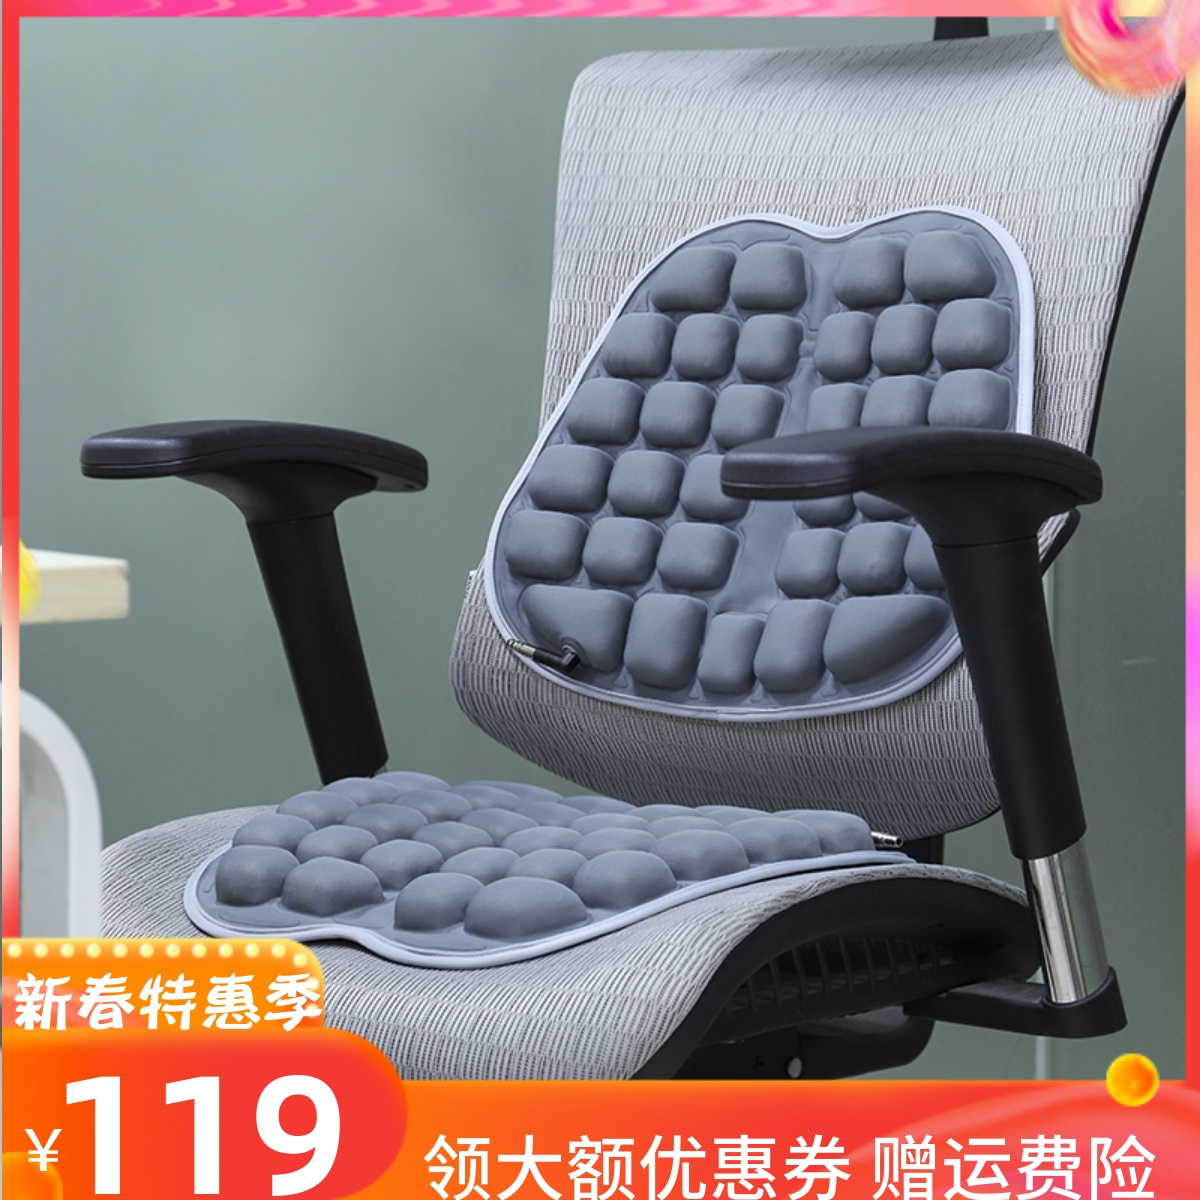 innerneed气囊坐垫按摩减压透气办公室椅垫空气3D充气加水软座垫